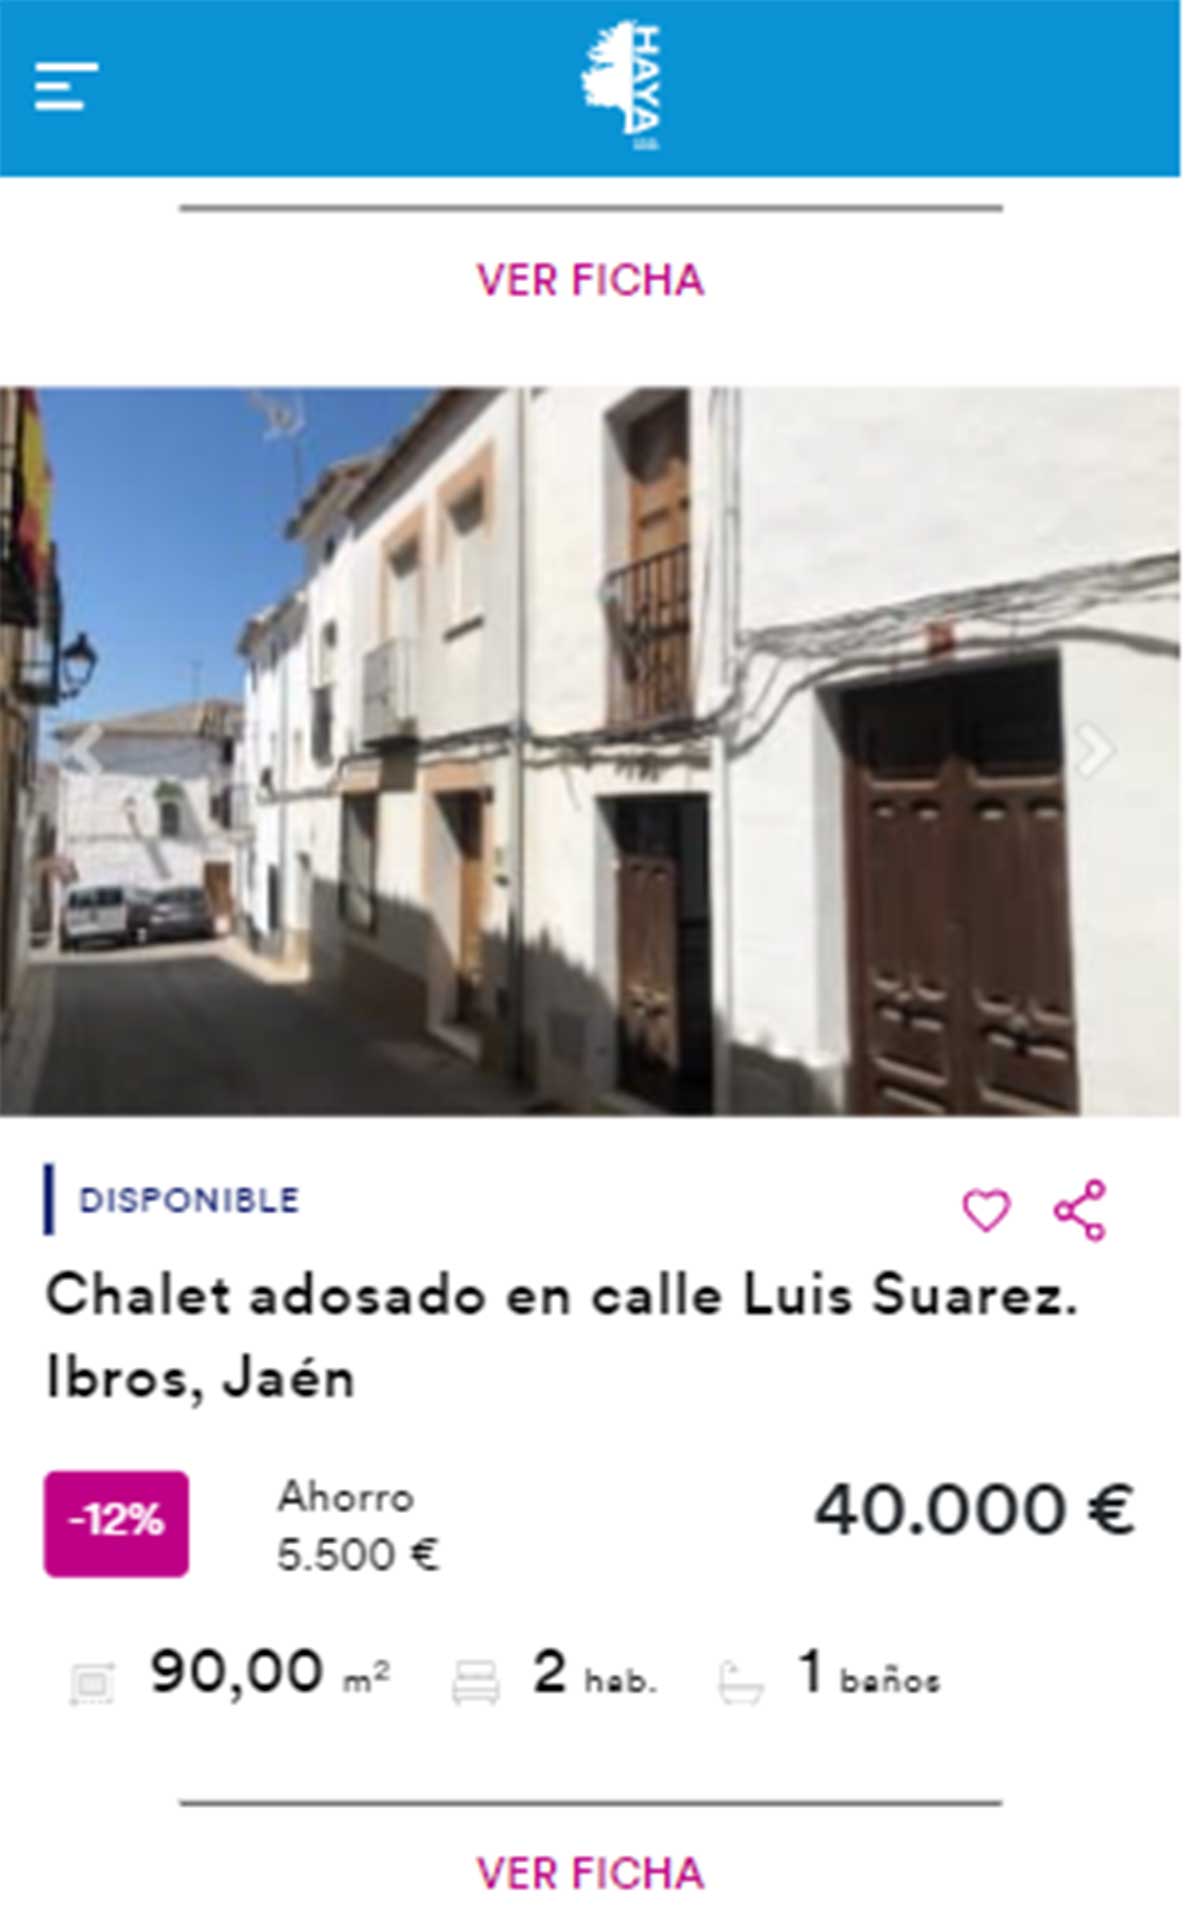 Chalet adosado por 40.000 euros